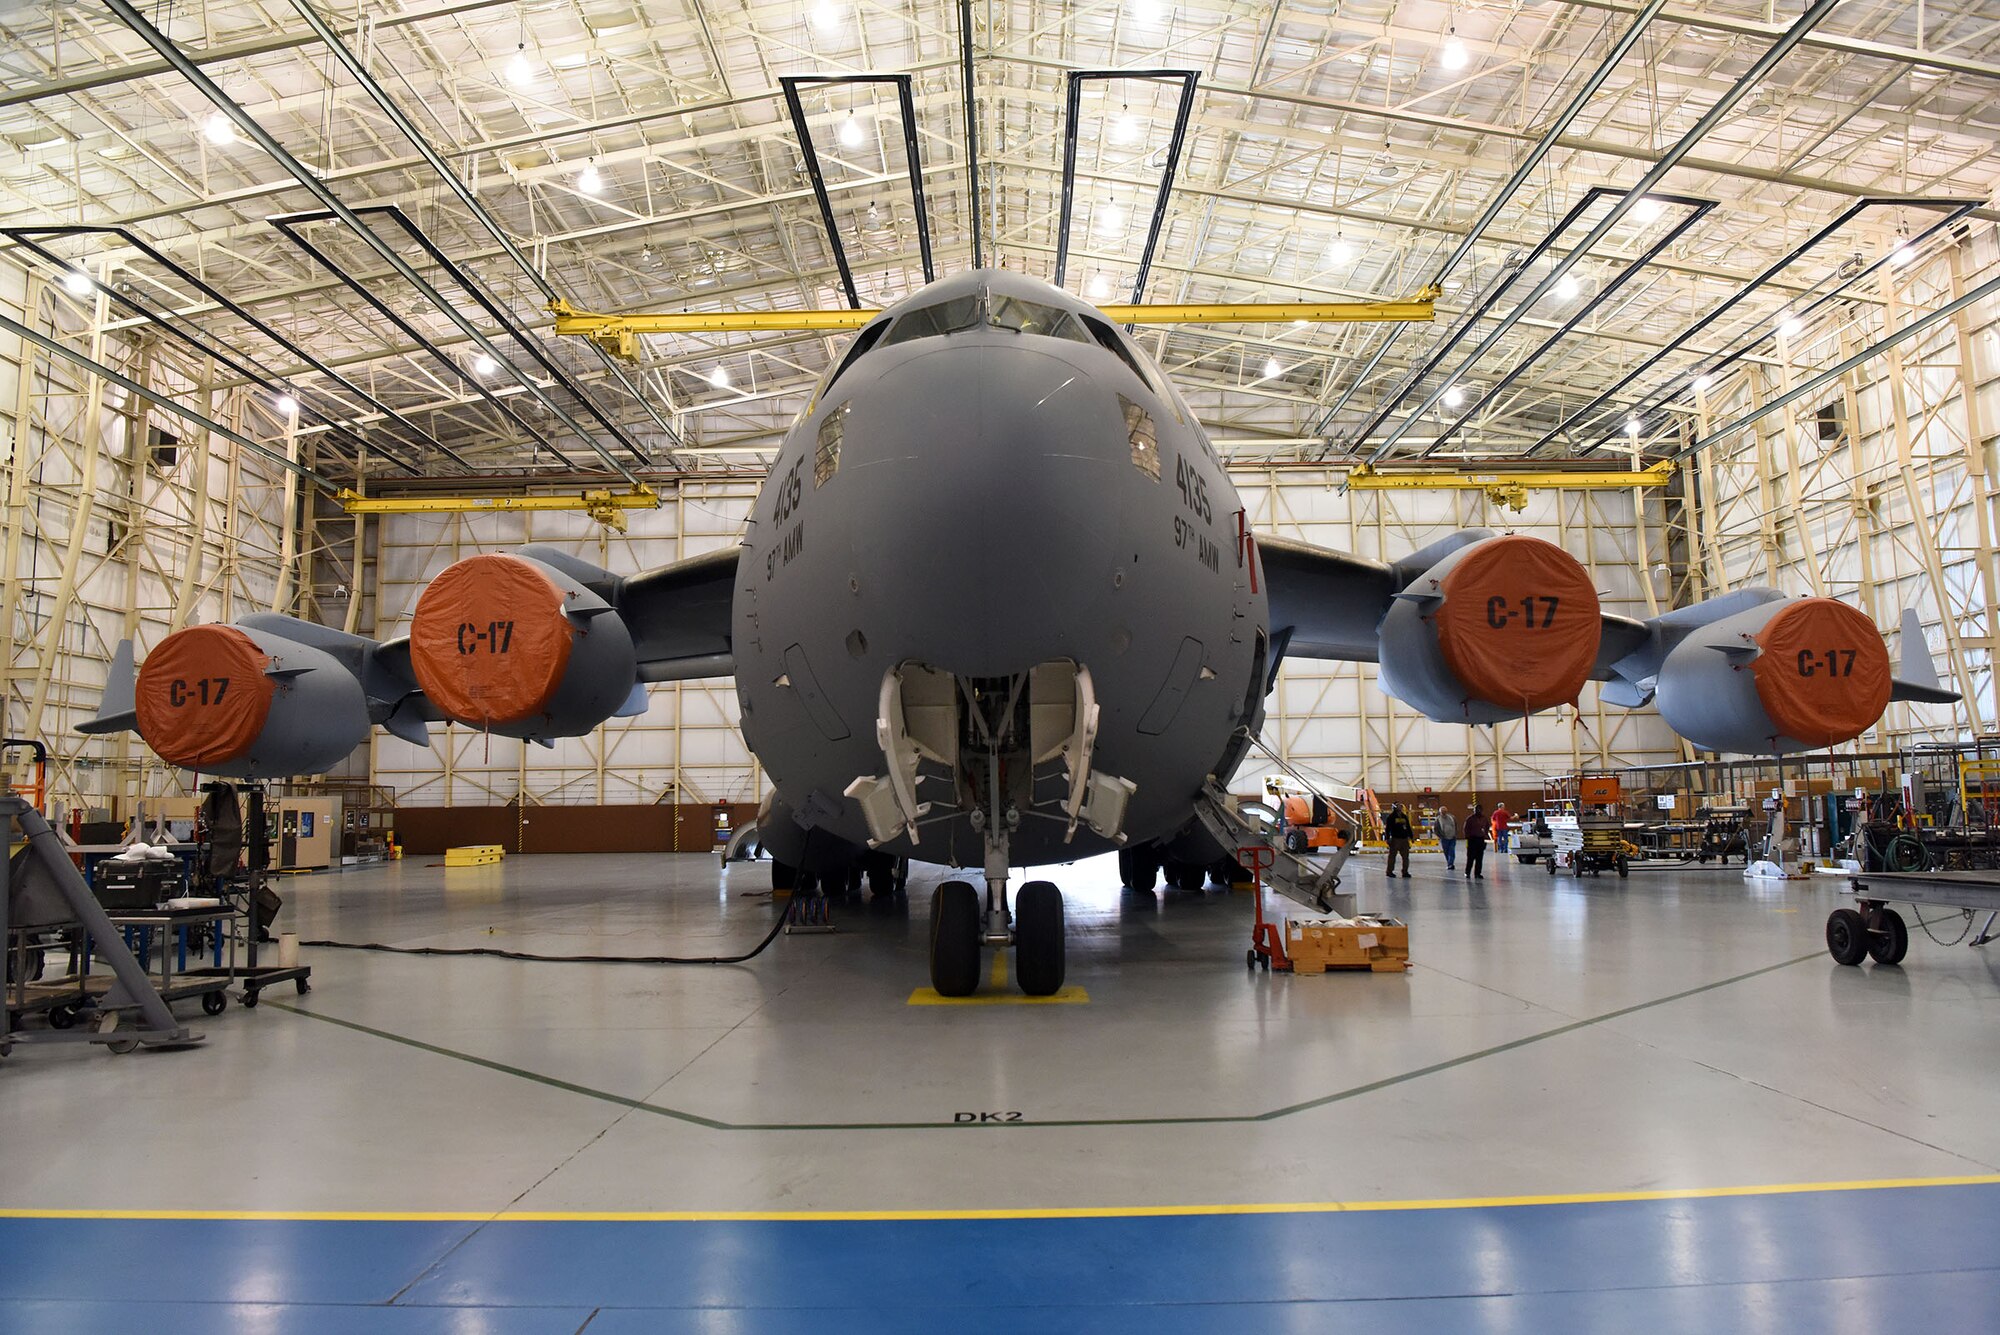 Aircraft shows a C-17 aircraft sitting in a hangar.